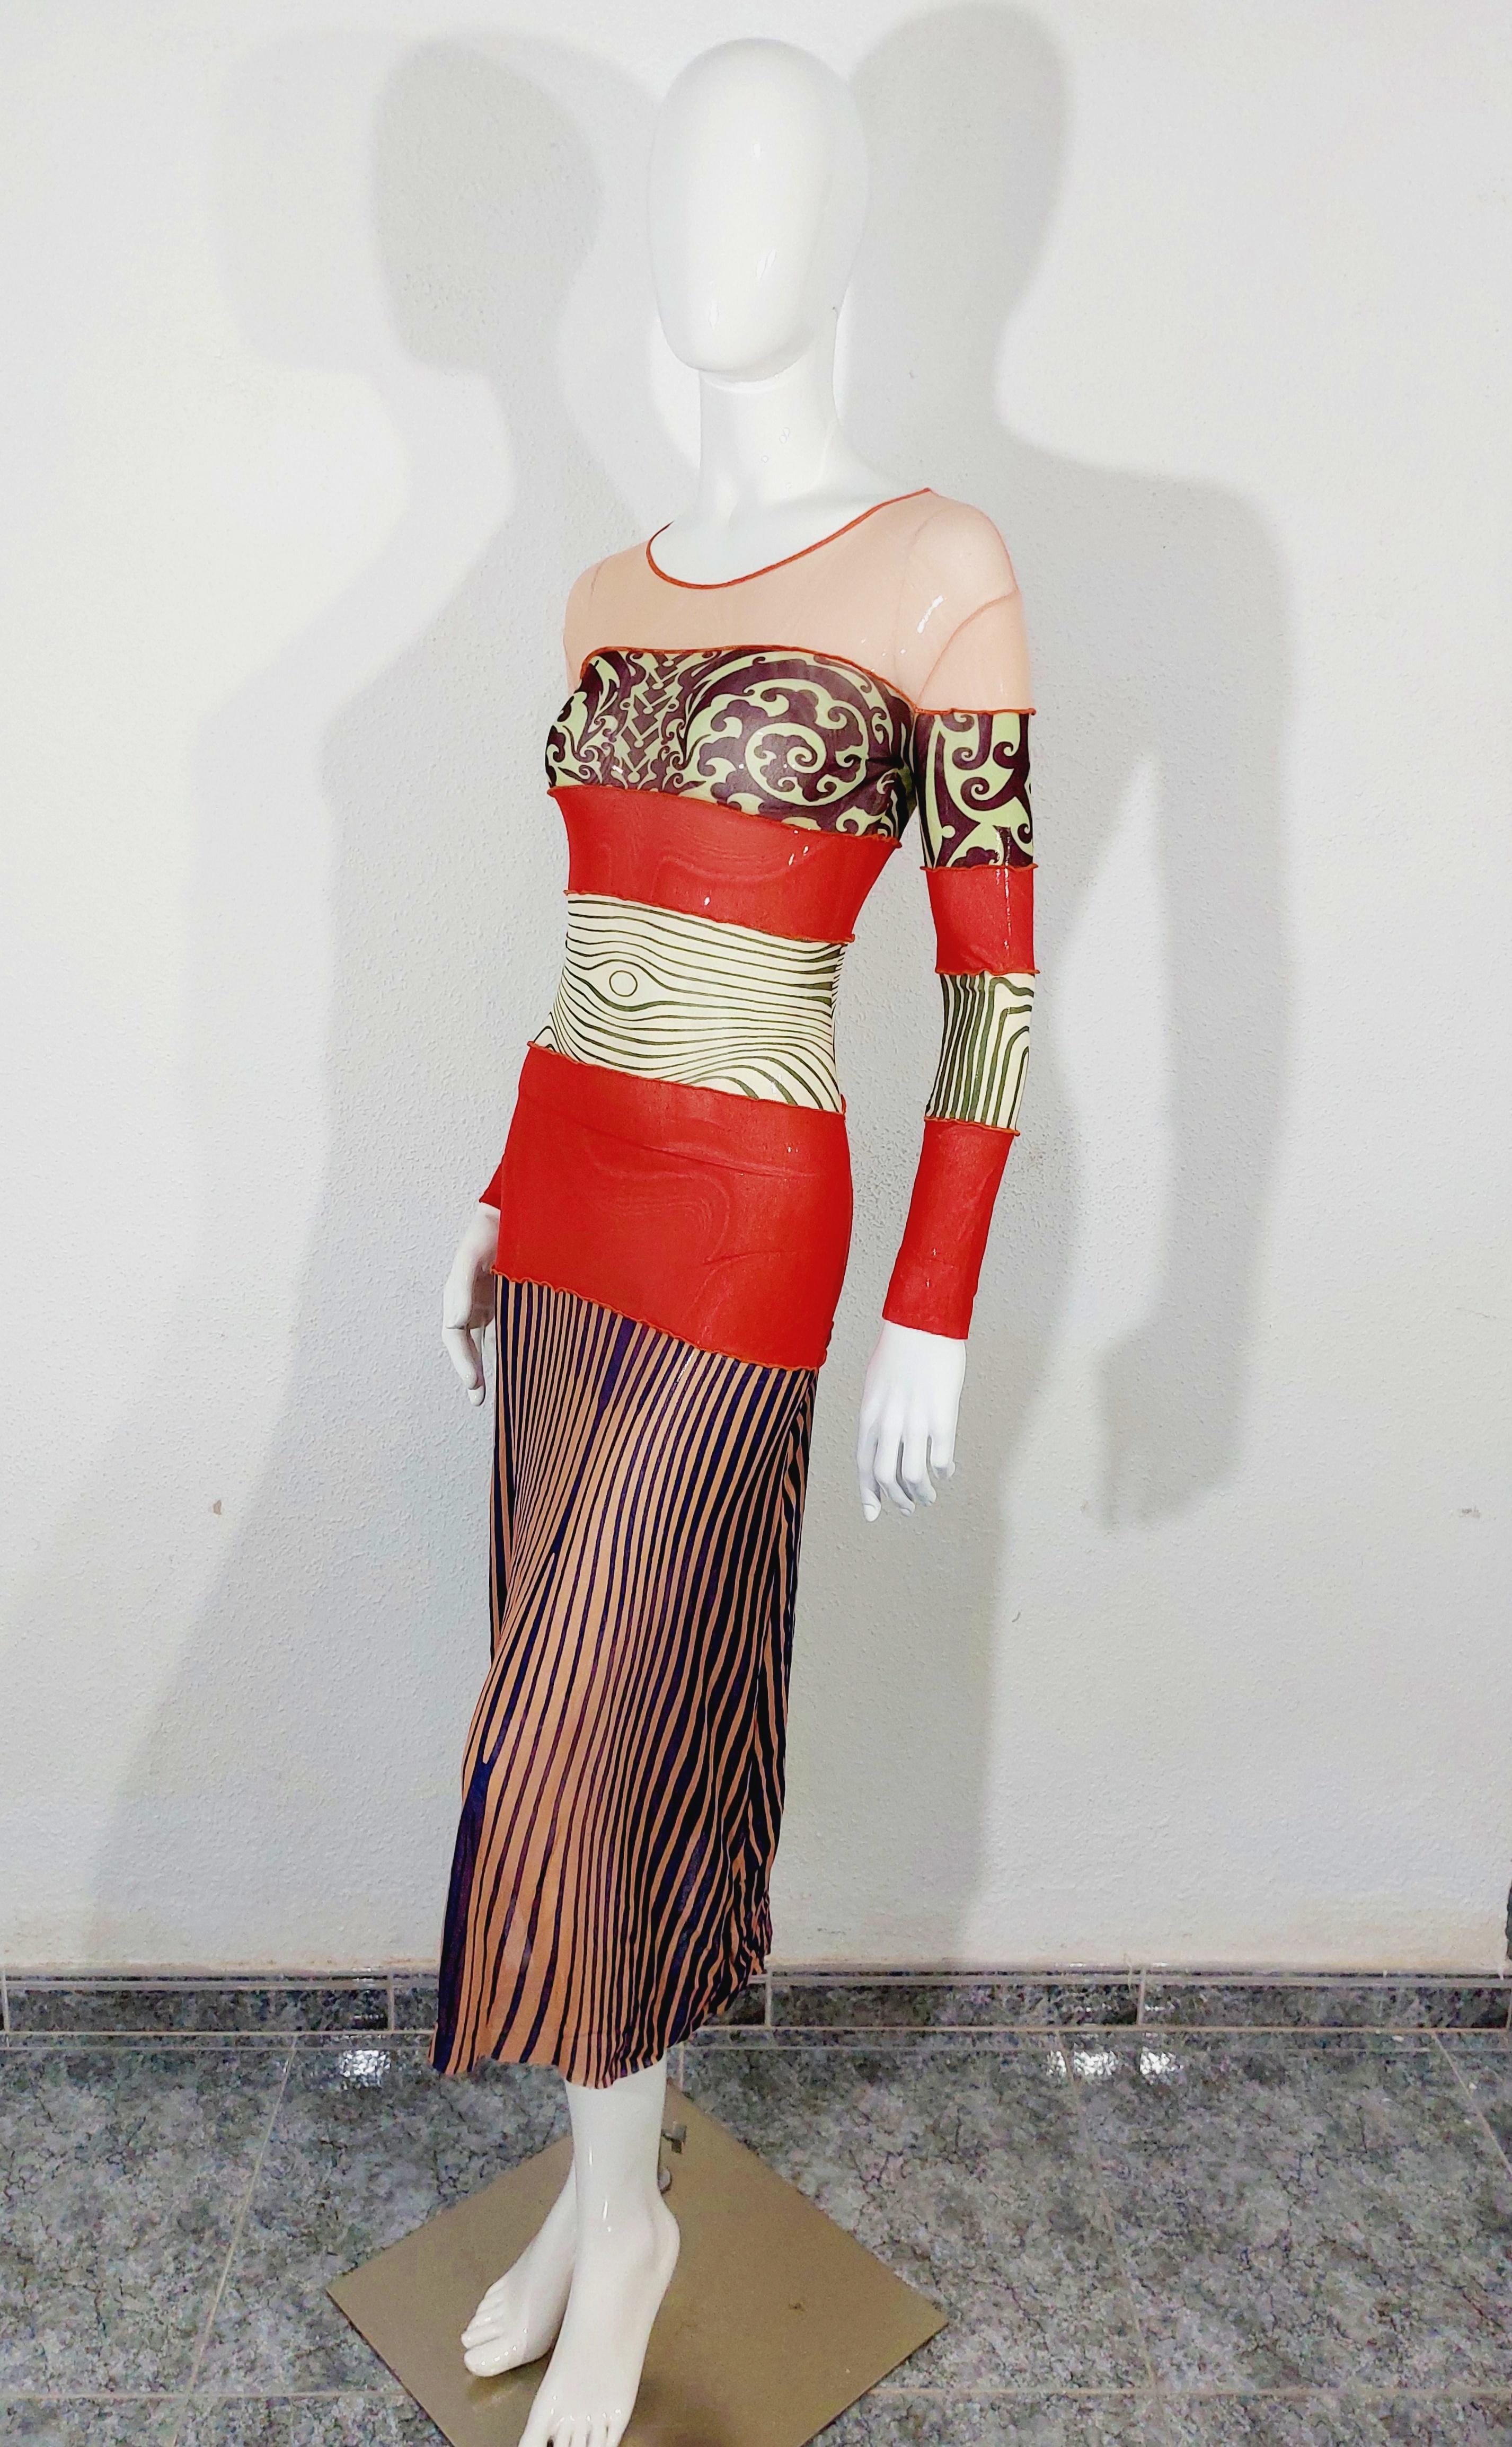 Jean Paul Gaultier Optical Illusion Nude Ethic Trompe l'oeil Vanessa Guide Dress For Sale 3